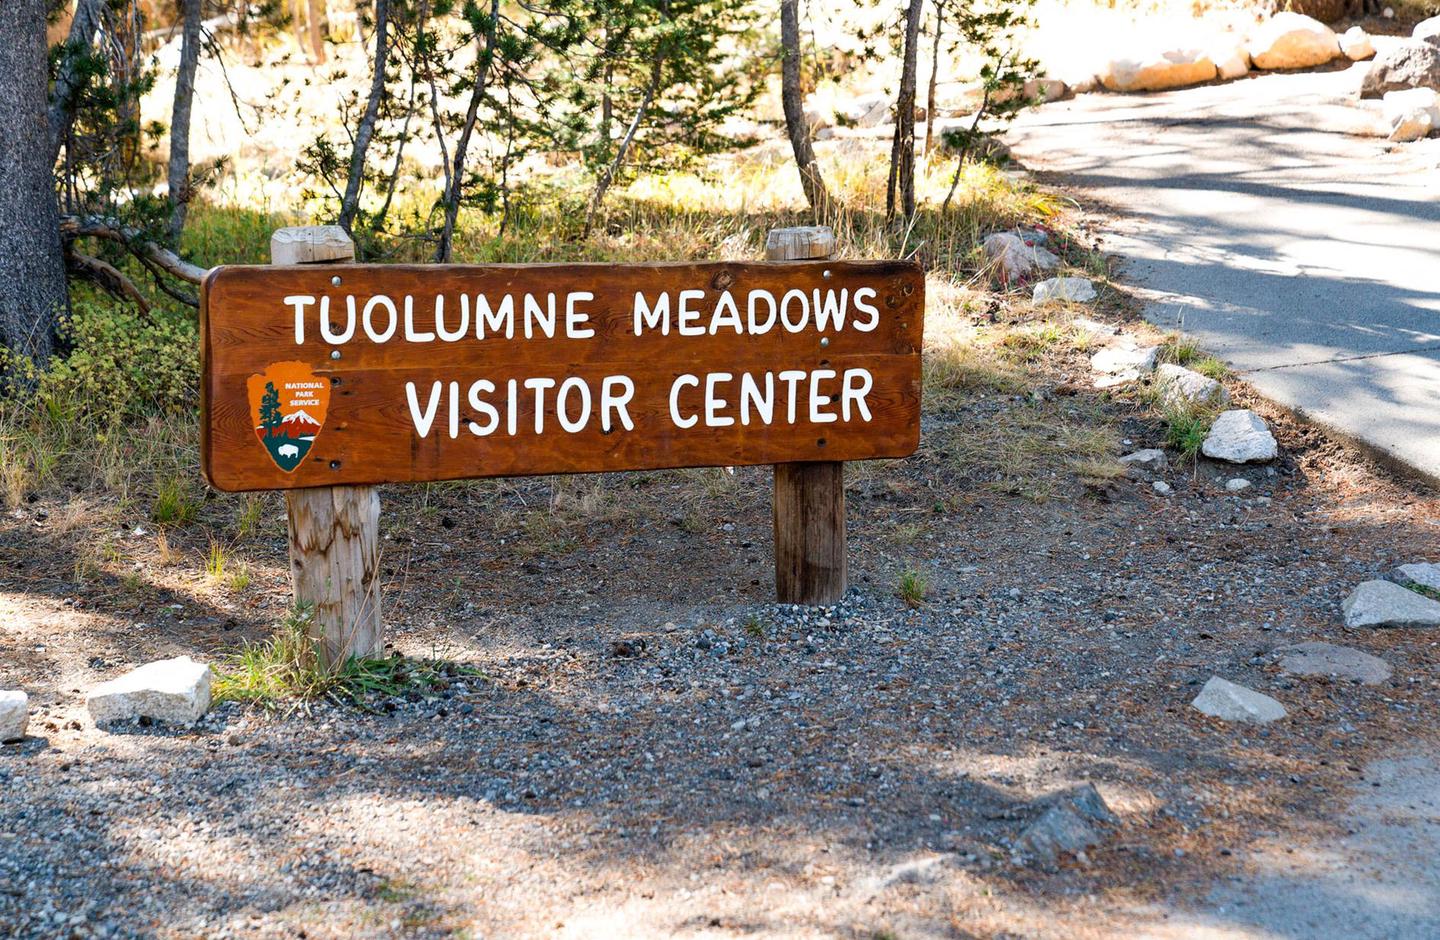 Tuolumne Meadows Visitor Center SignTuolumne Meadows Visitor Center sign